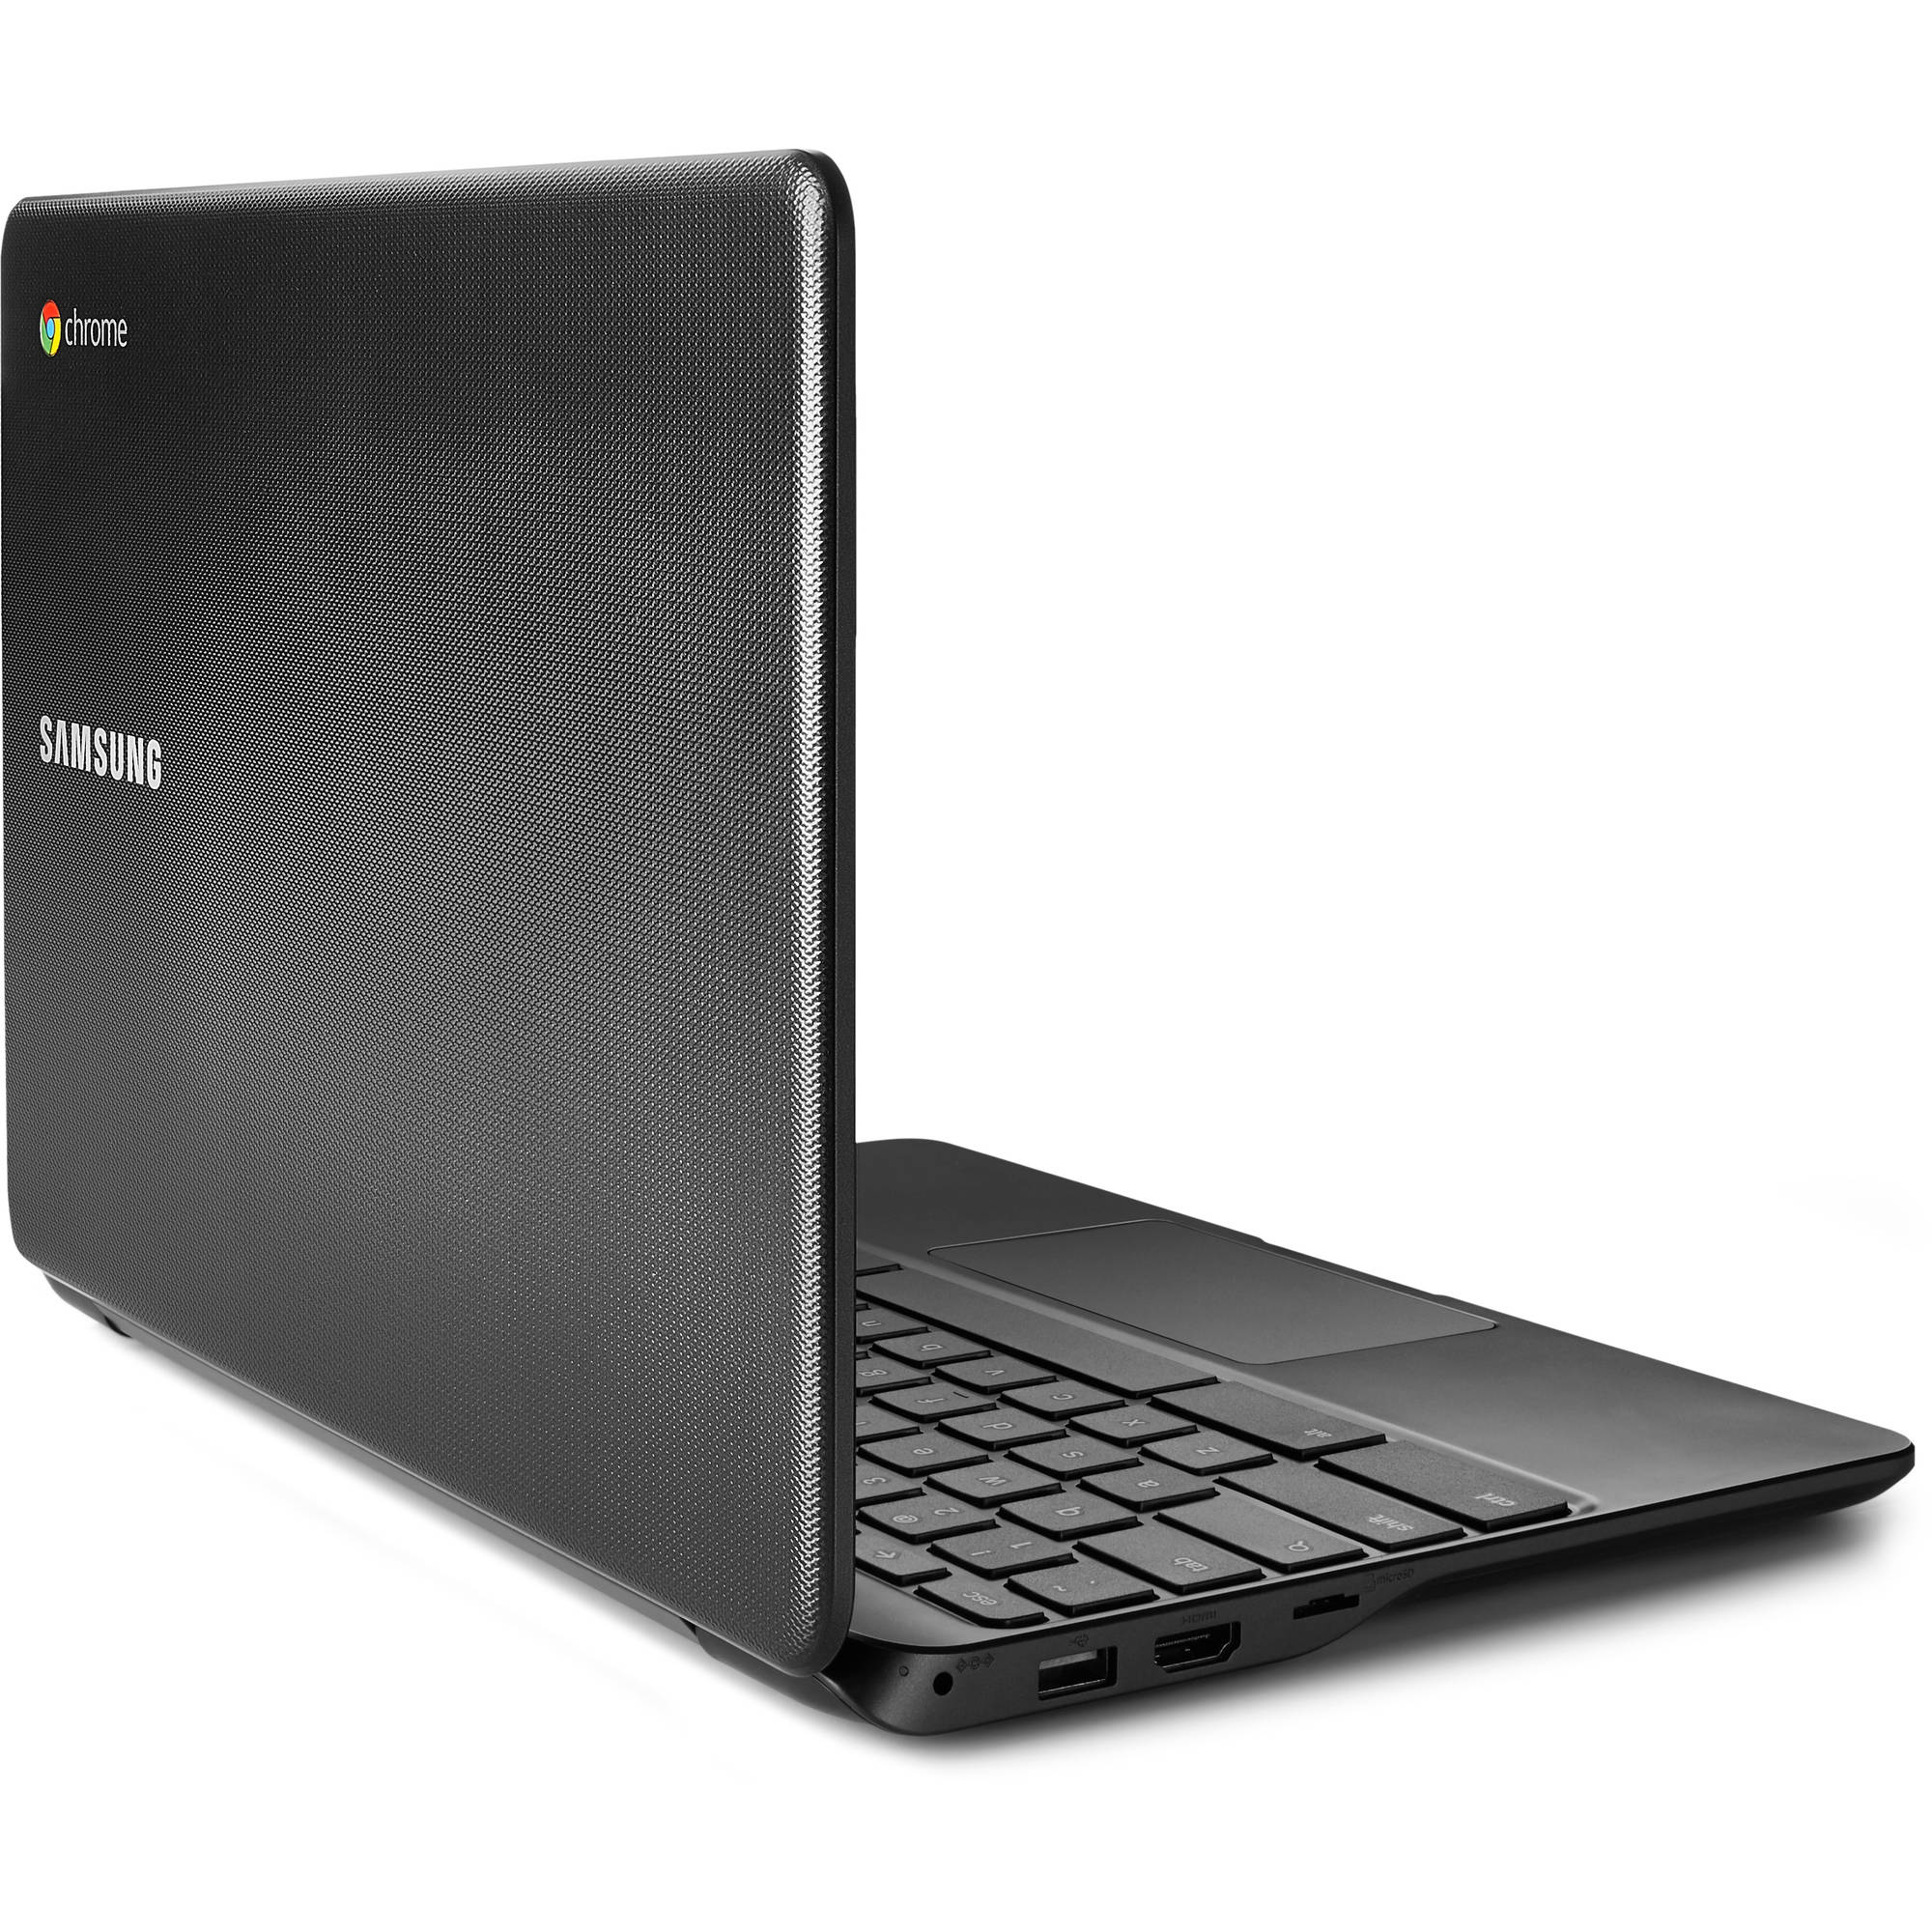 SAMSUNG 11.6" Chromebook 3, Intel Celeron N3060, 4GB RAM, 16GB eMMC, Metallic Black - XE500C13-K04US (Google Classroom Ready) - image 4 of 9